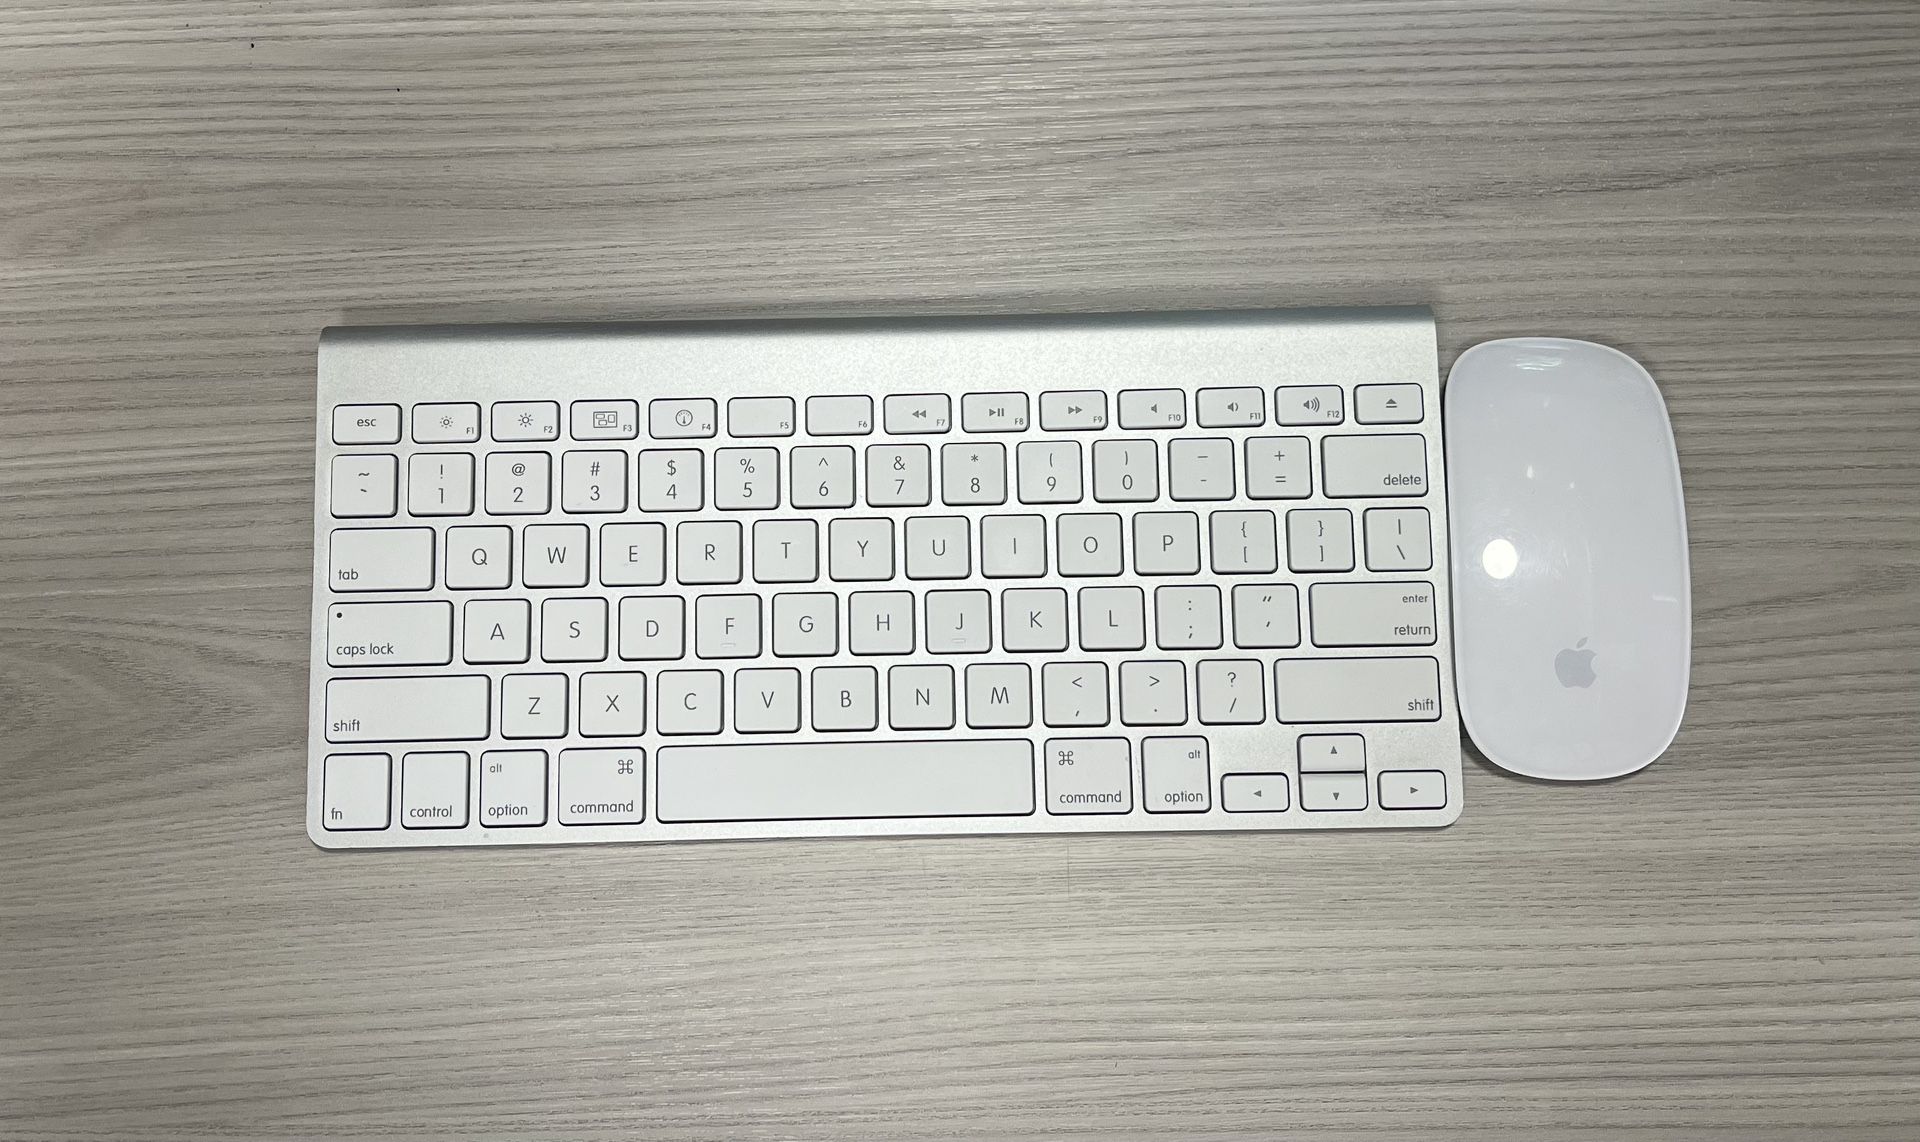 Apple Magic Keyboard & Mouse